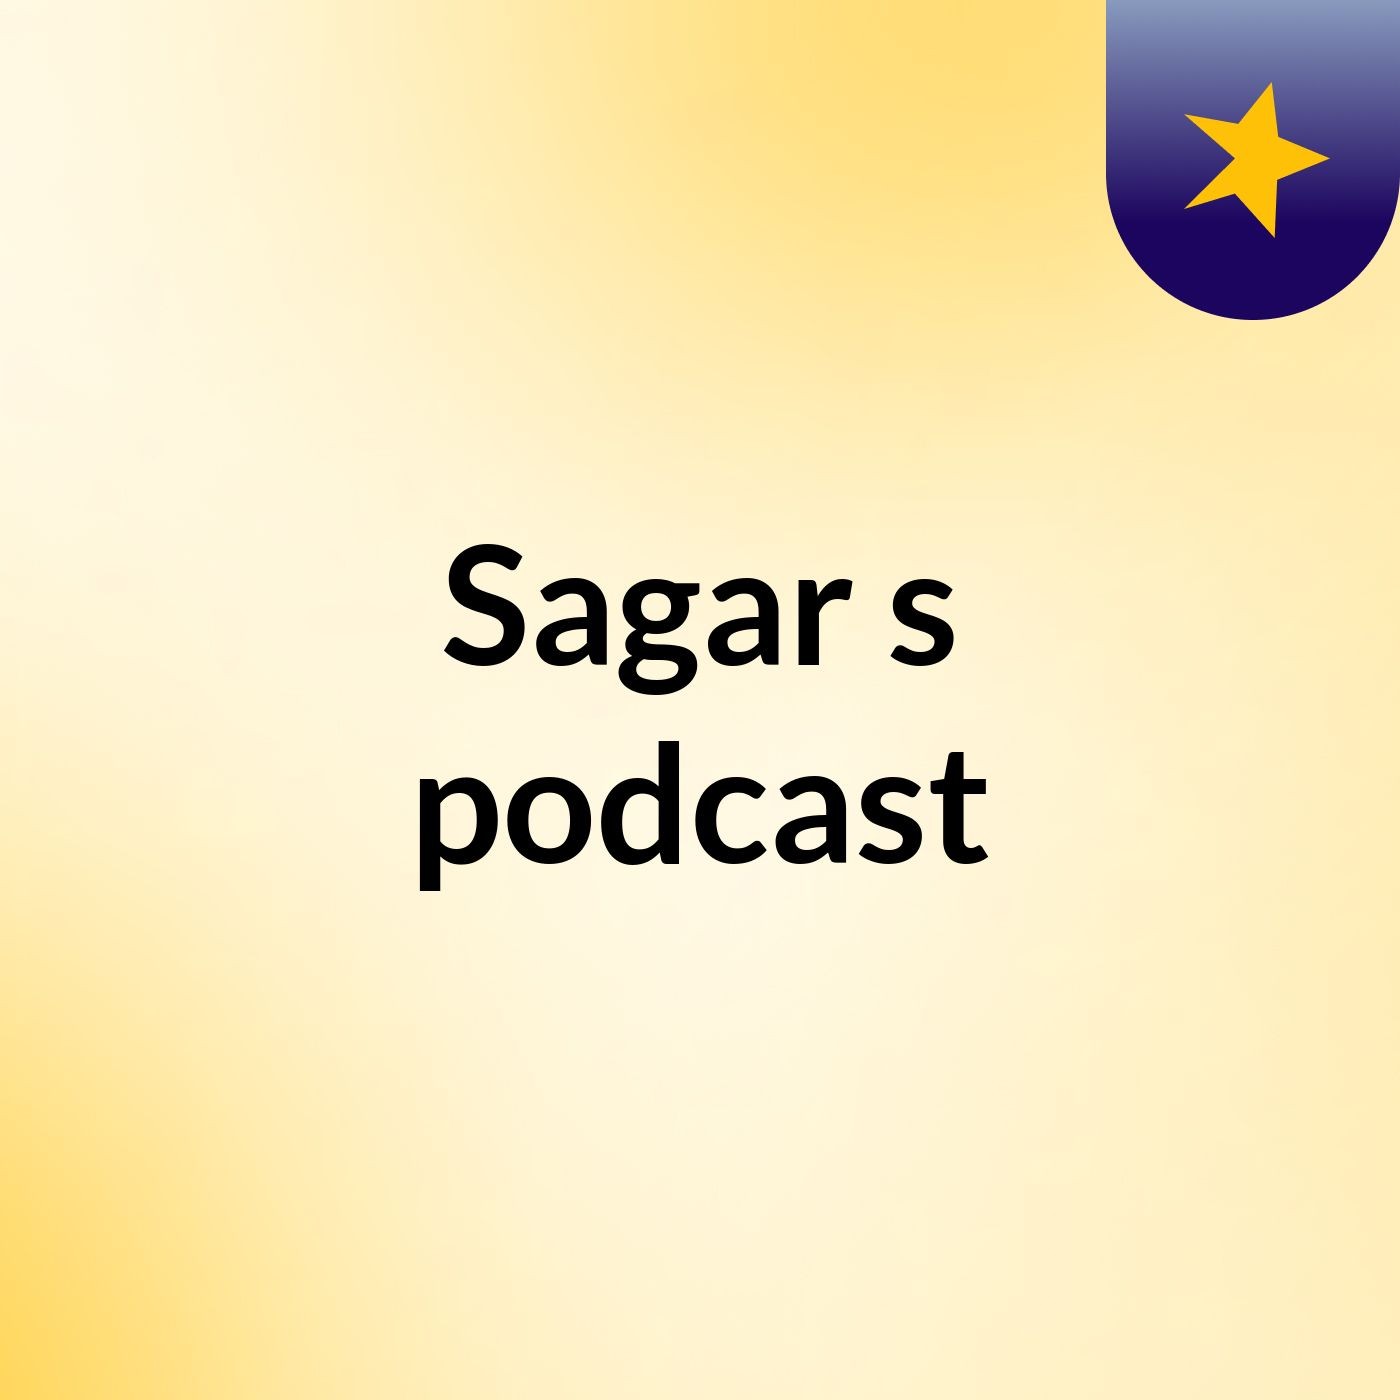 Episode 7 - Sagar's podcast